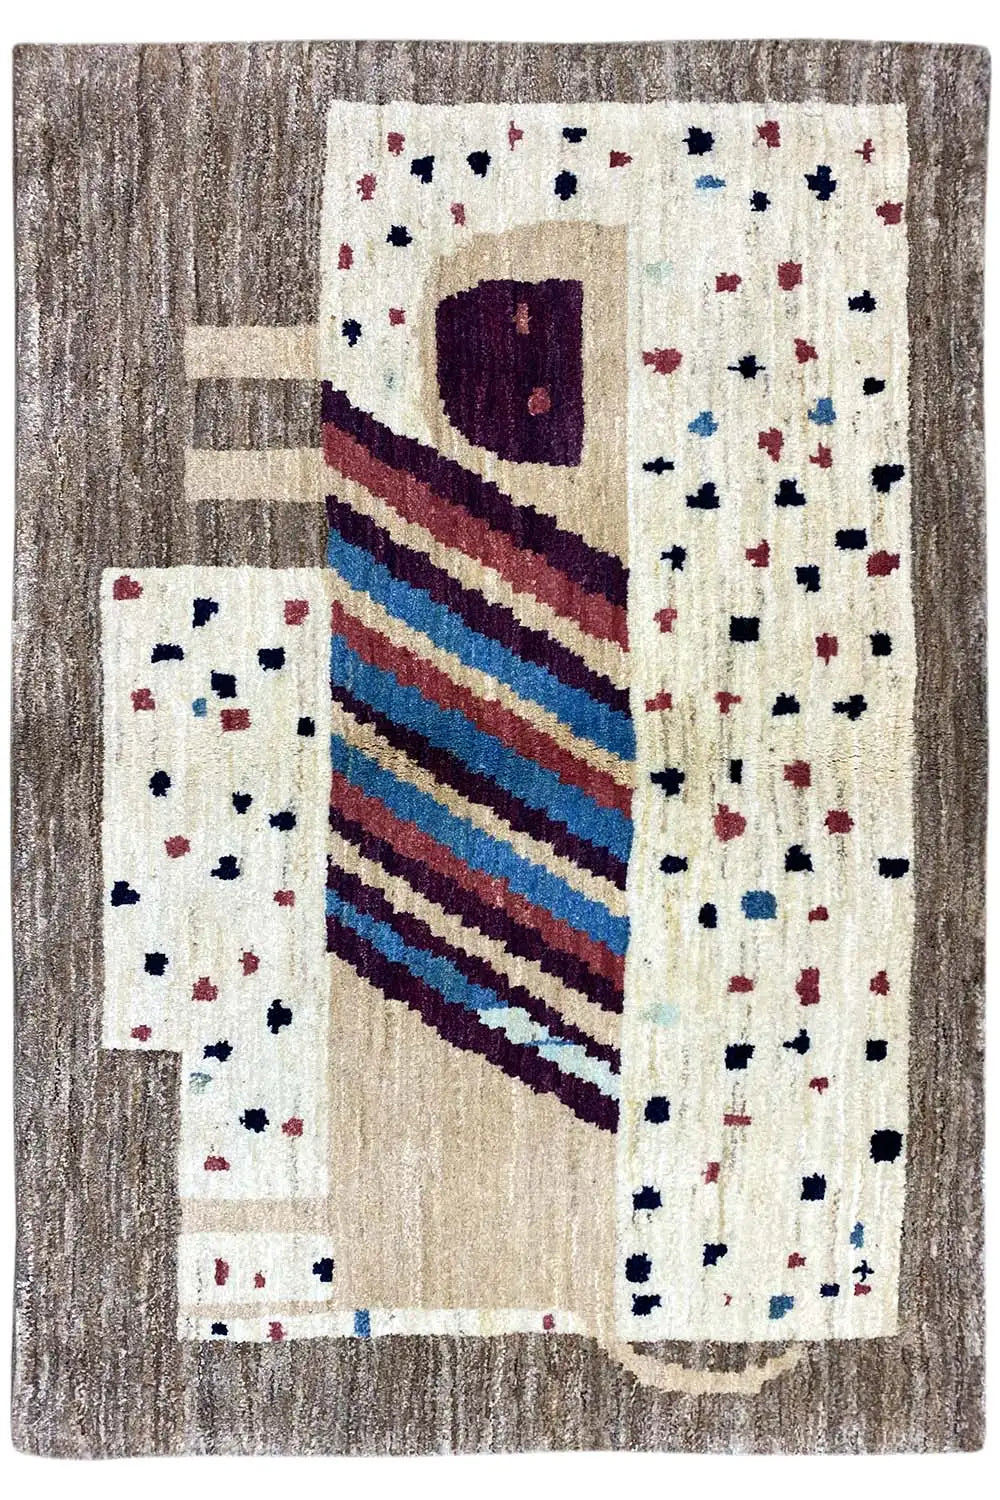 Löwen Gabbeh (121x83cm) - German Carpet Shop